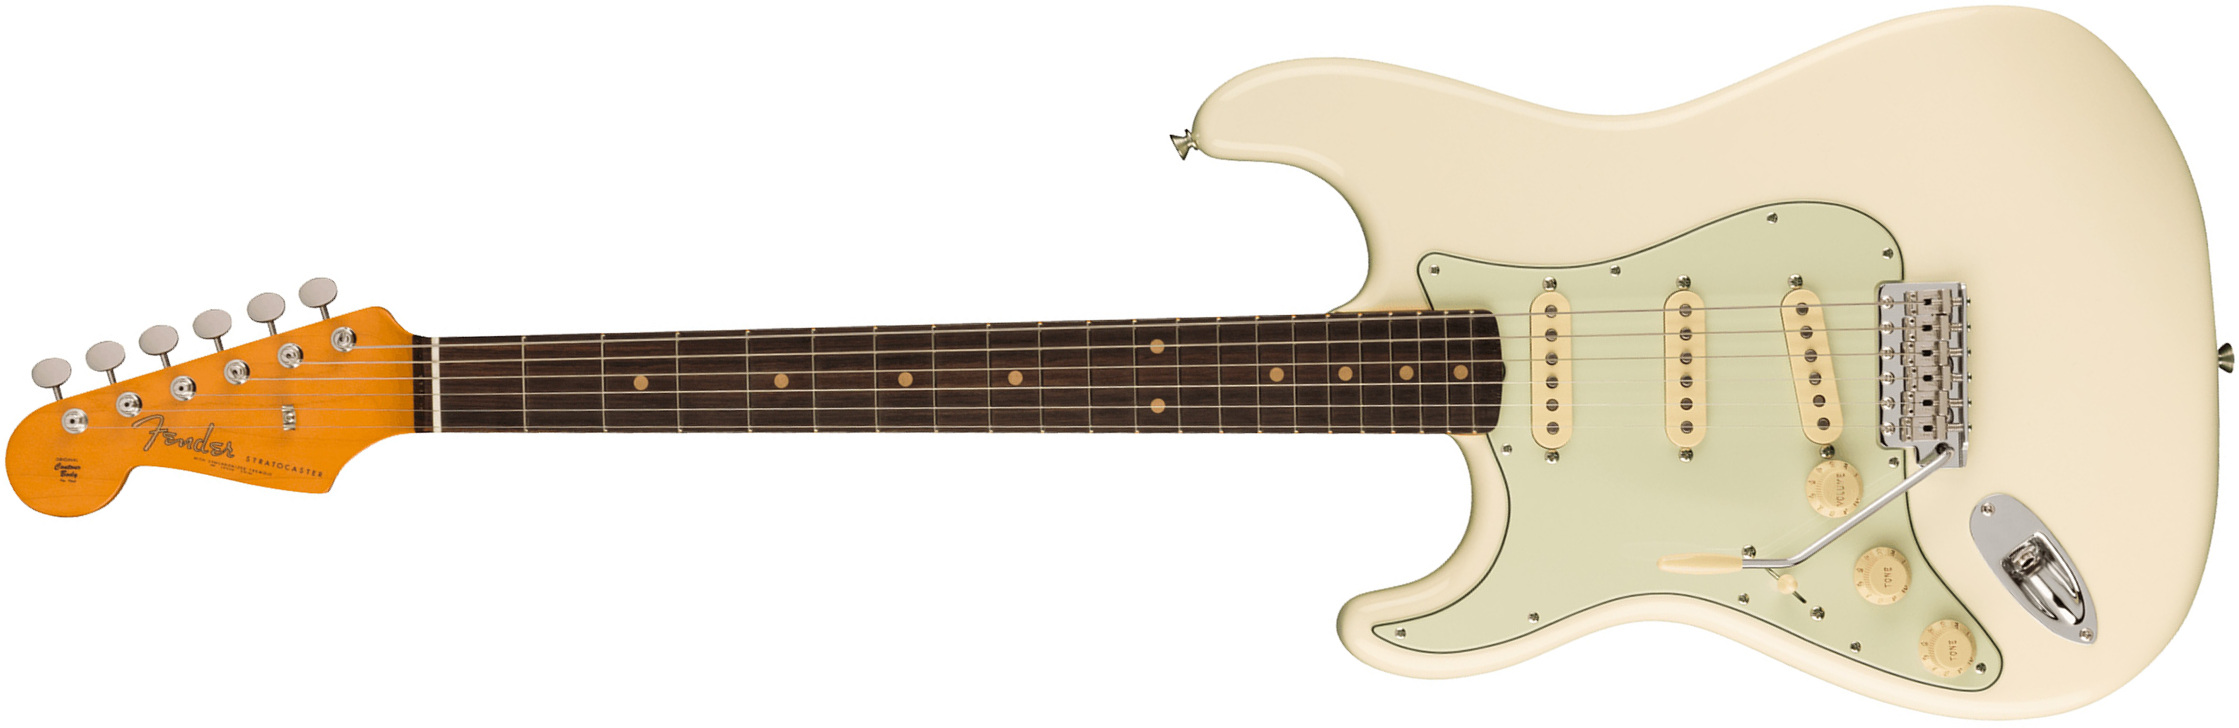 Fender Strat 1961 American Vintage Ii Lh Gaucher Usa 3s Trem Rw - Olympic White - Guitarra electrica para zurdos - Main picture